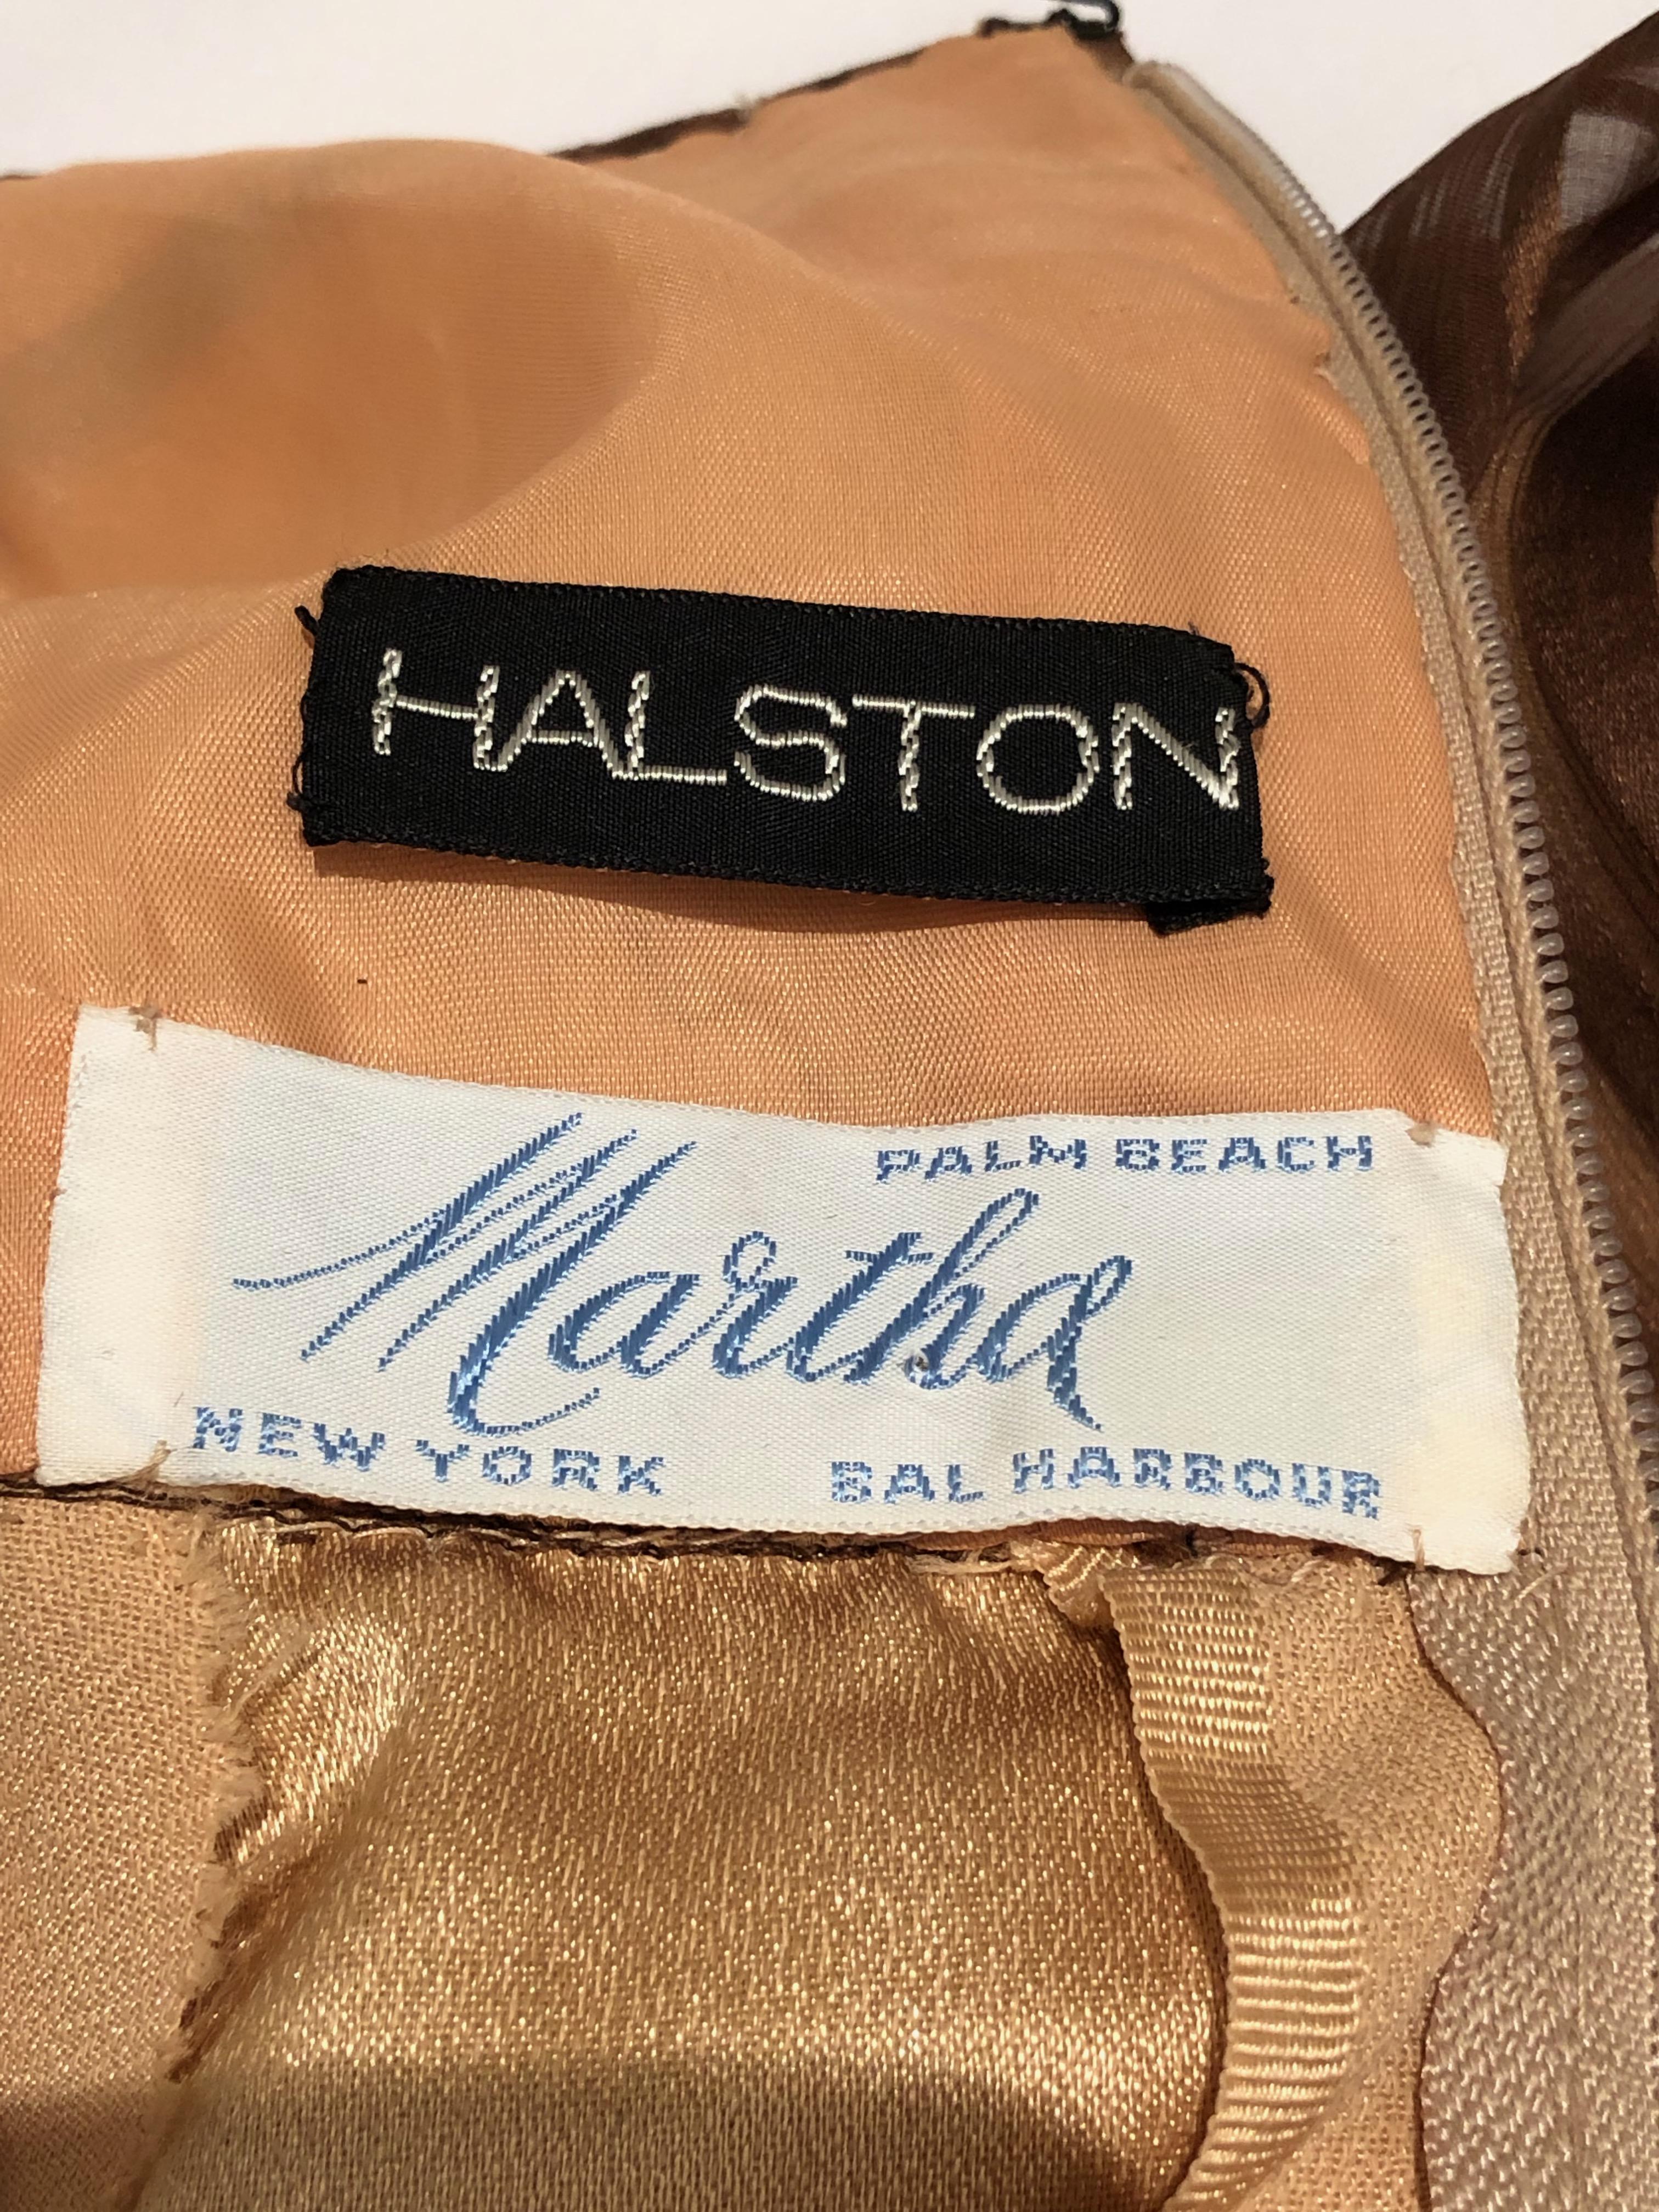 Halston for Martha Park Ave 1970's Beaded Chiffon Empire Dress with Collar Cape 6